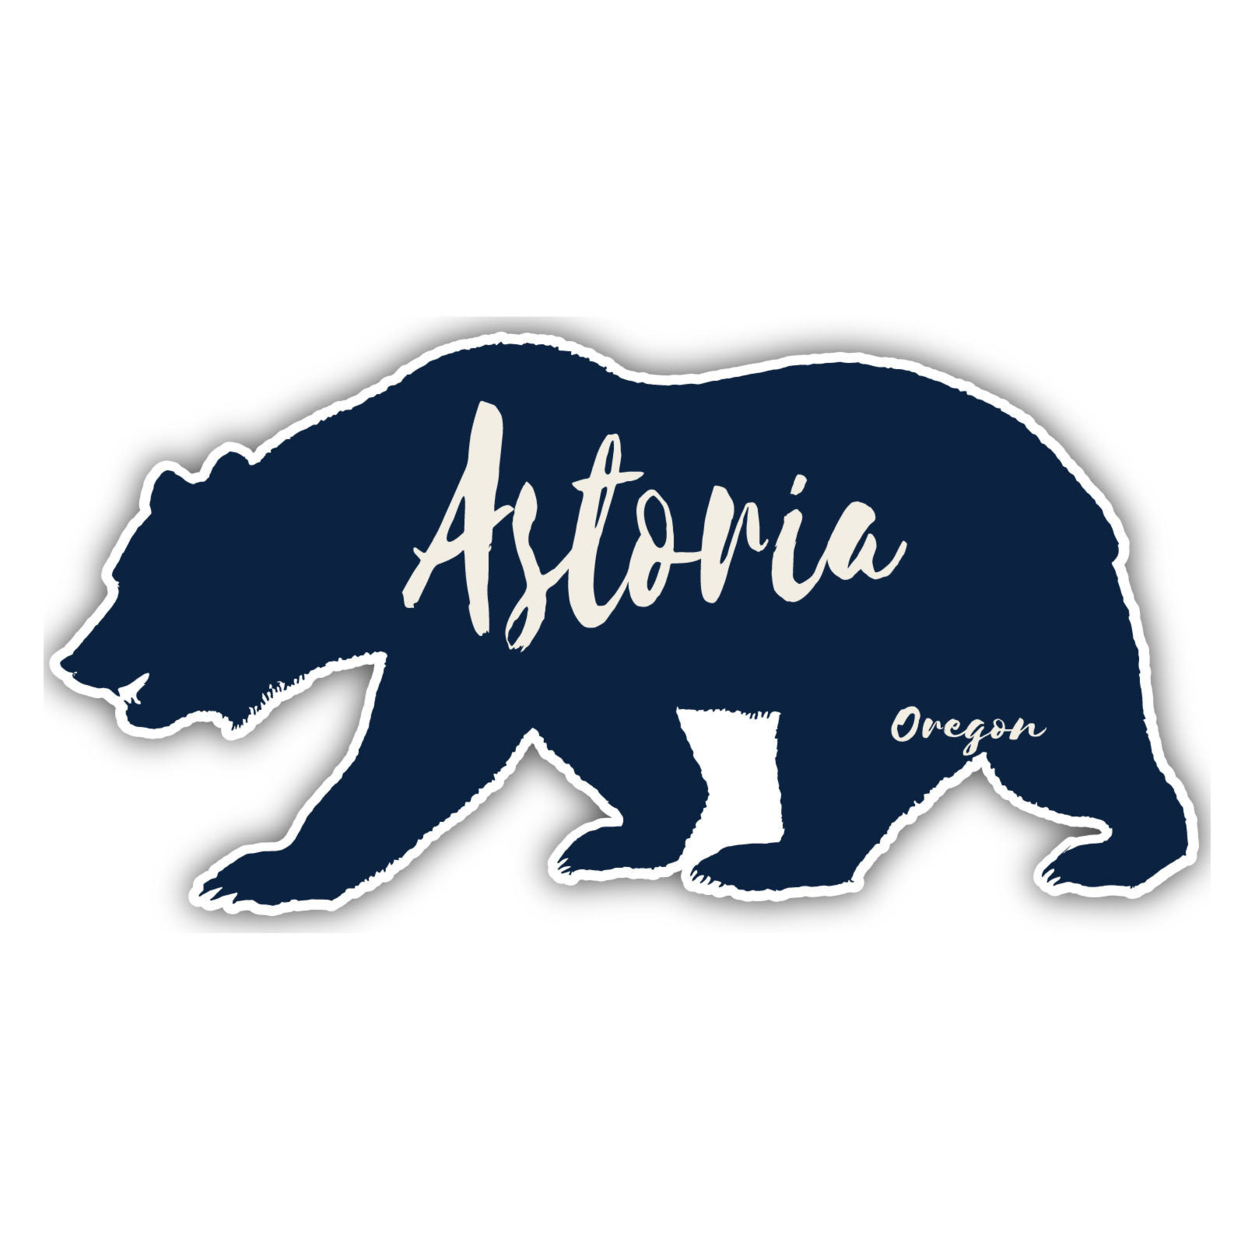 Astoria Oregon Souvenir Decorative Stickers (Choose Theme And Size) - Single Unit, 10-Inch, Camp Life